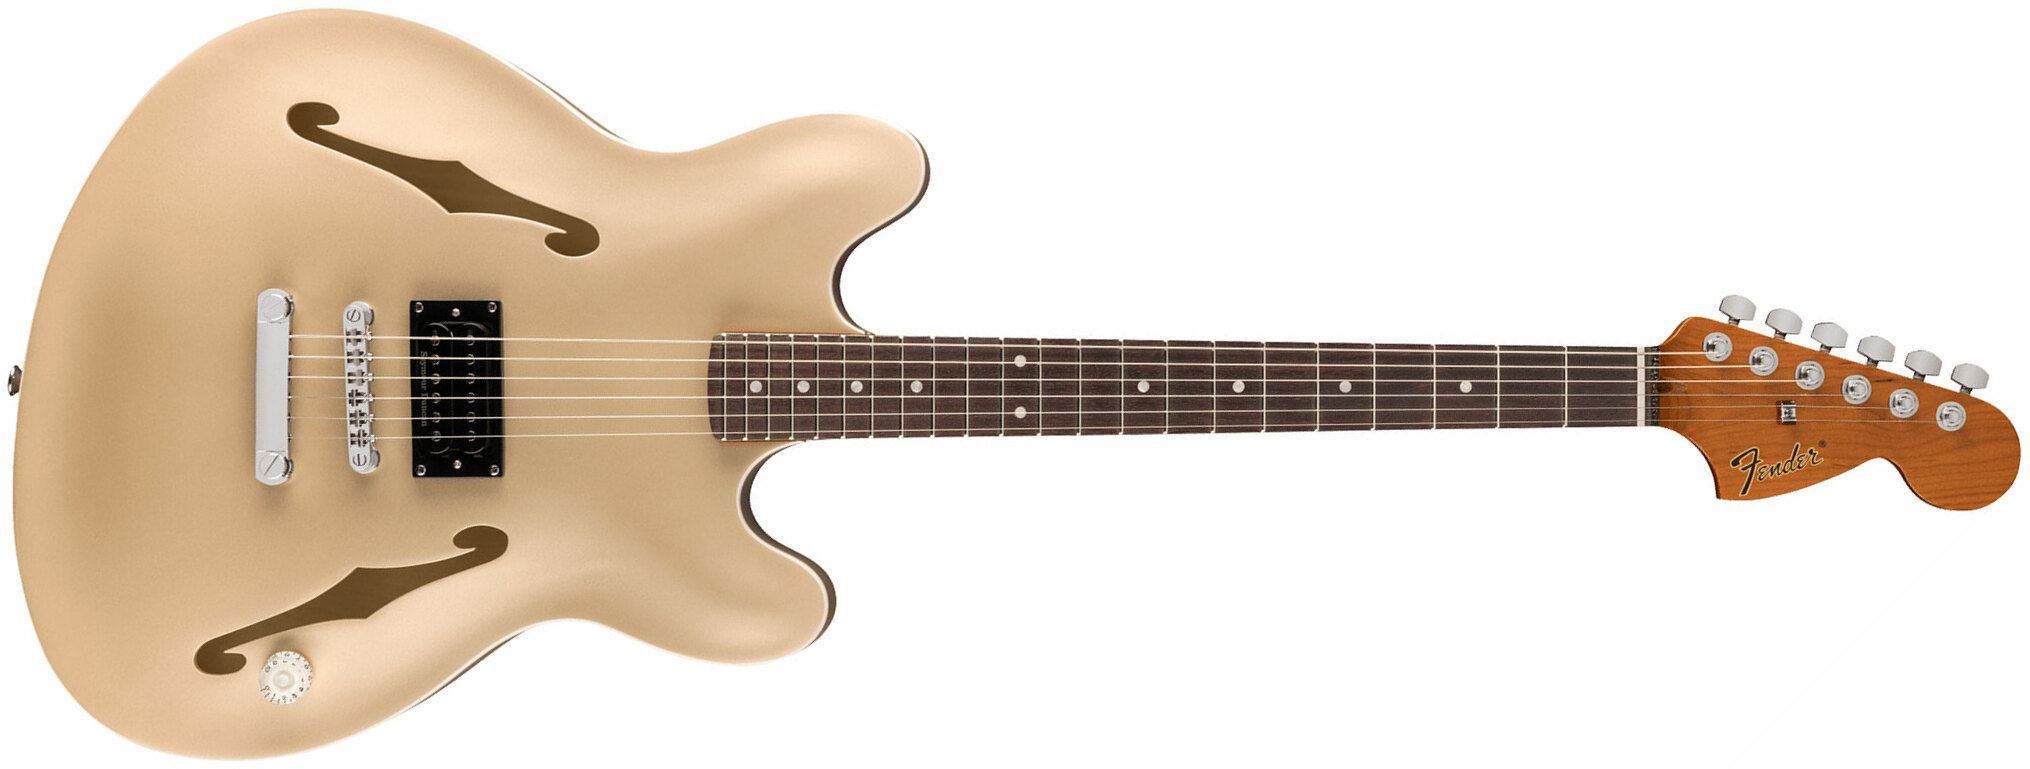 Fender Tom Delonge Starcaster 1h Seymour Duncan Ht Rw - Satin Shoreline Gold - Retro rock electric guitar - Main picture